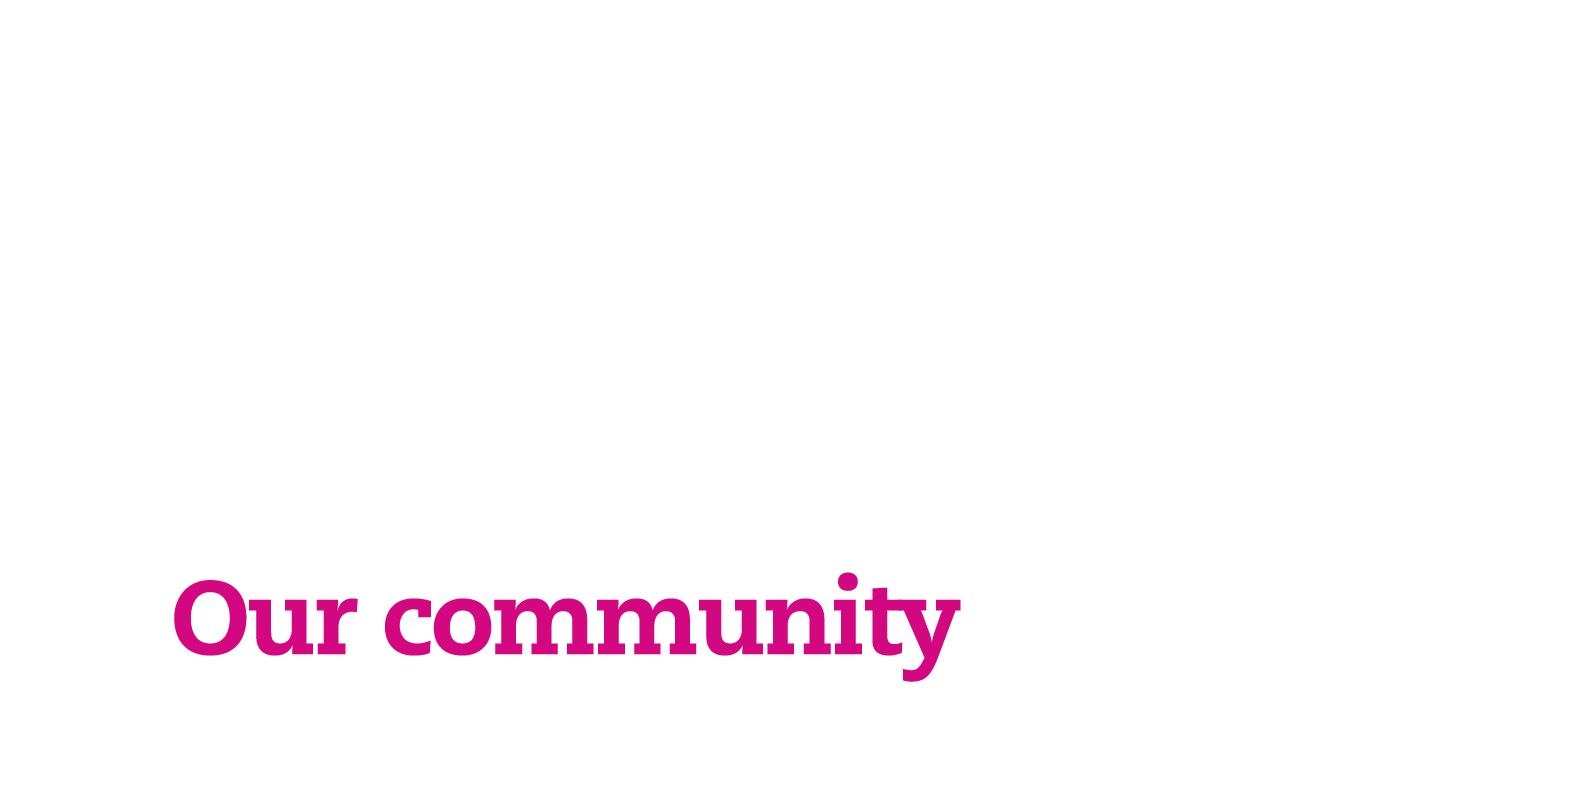 Banner evolution - Our community